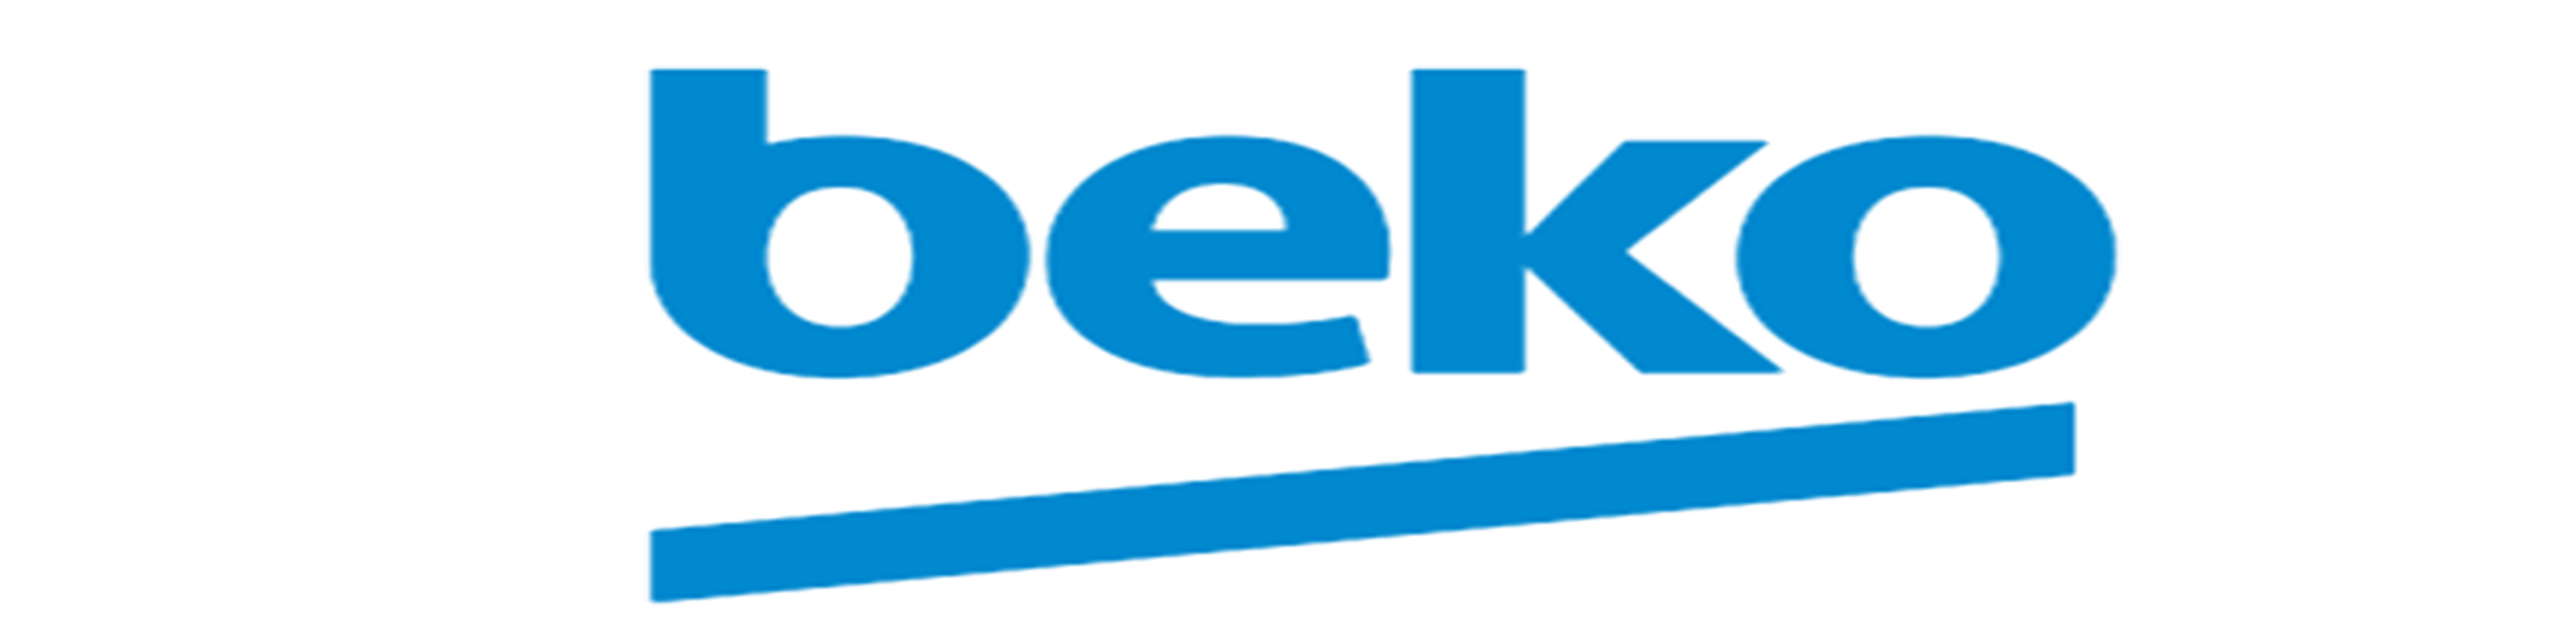 Beko Logo - Wd288 RECONDITIONED white beko single electric oven